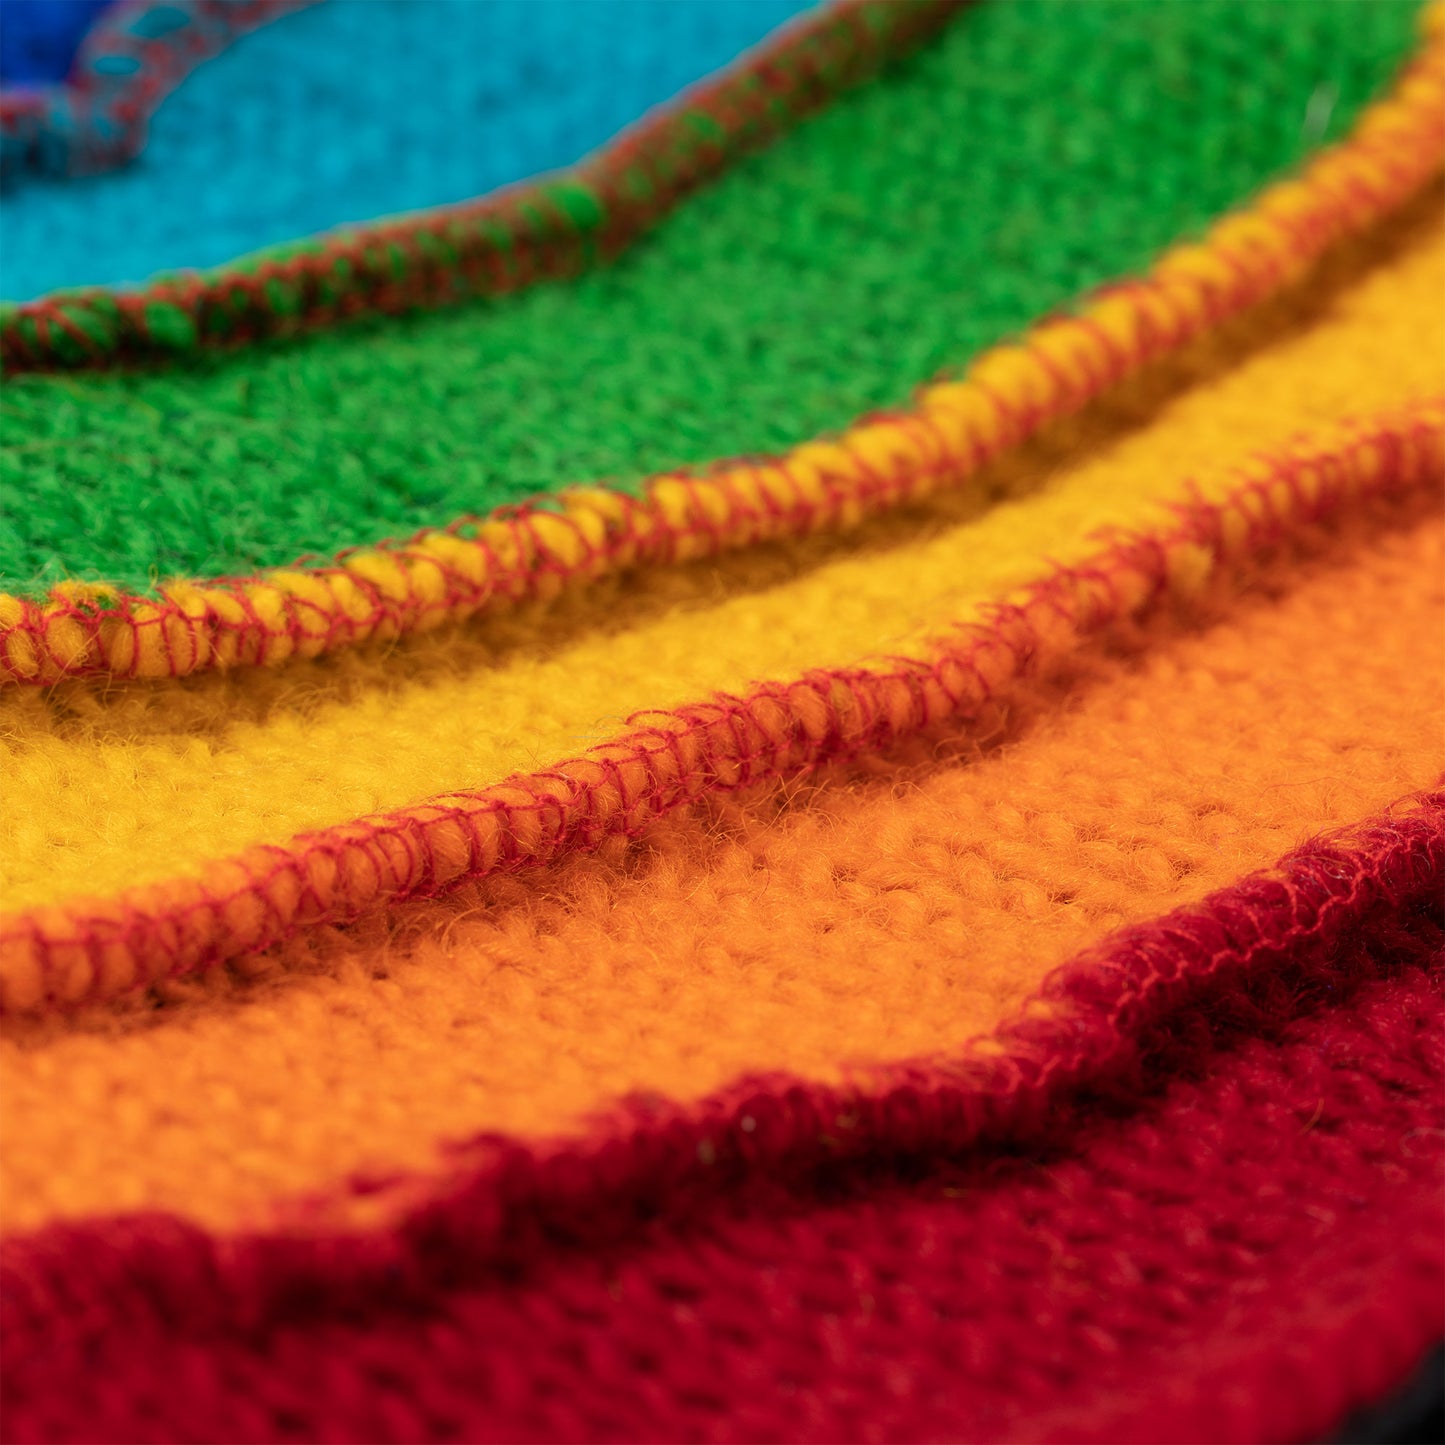 Hand Knit Rainbow Hat